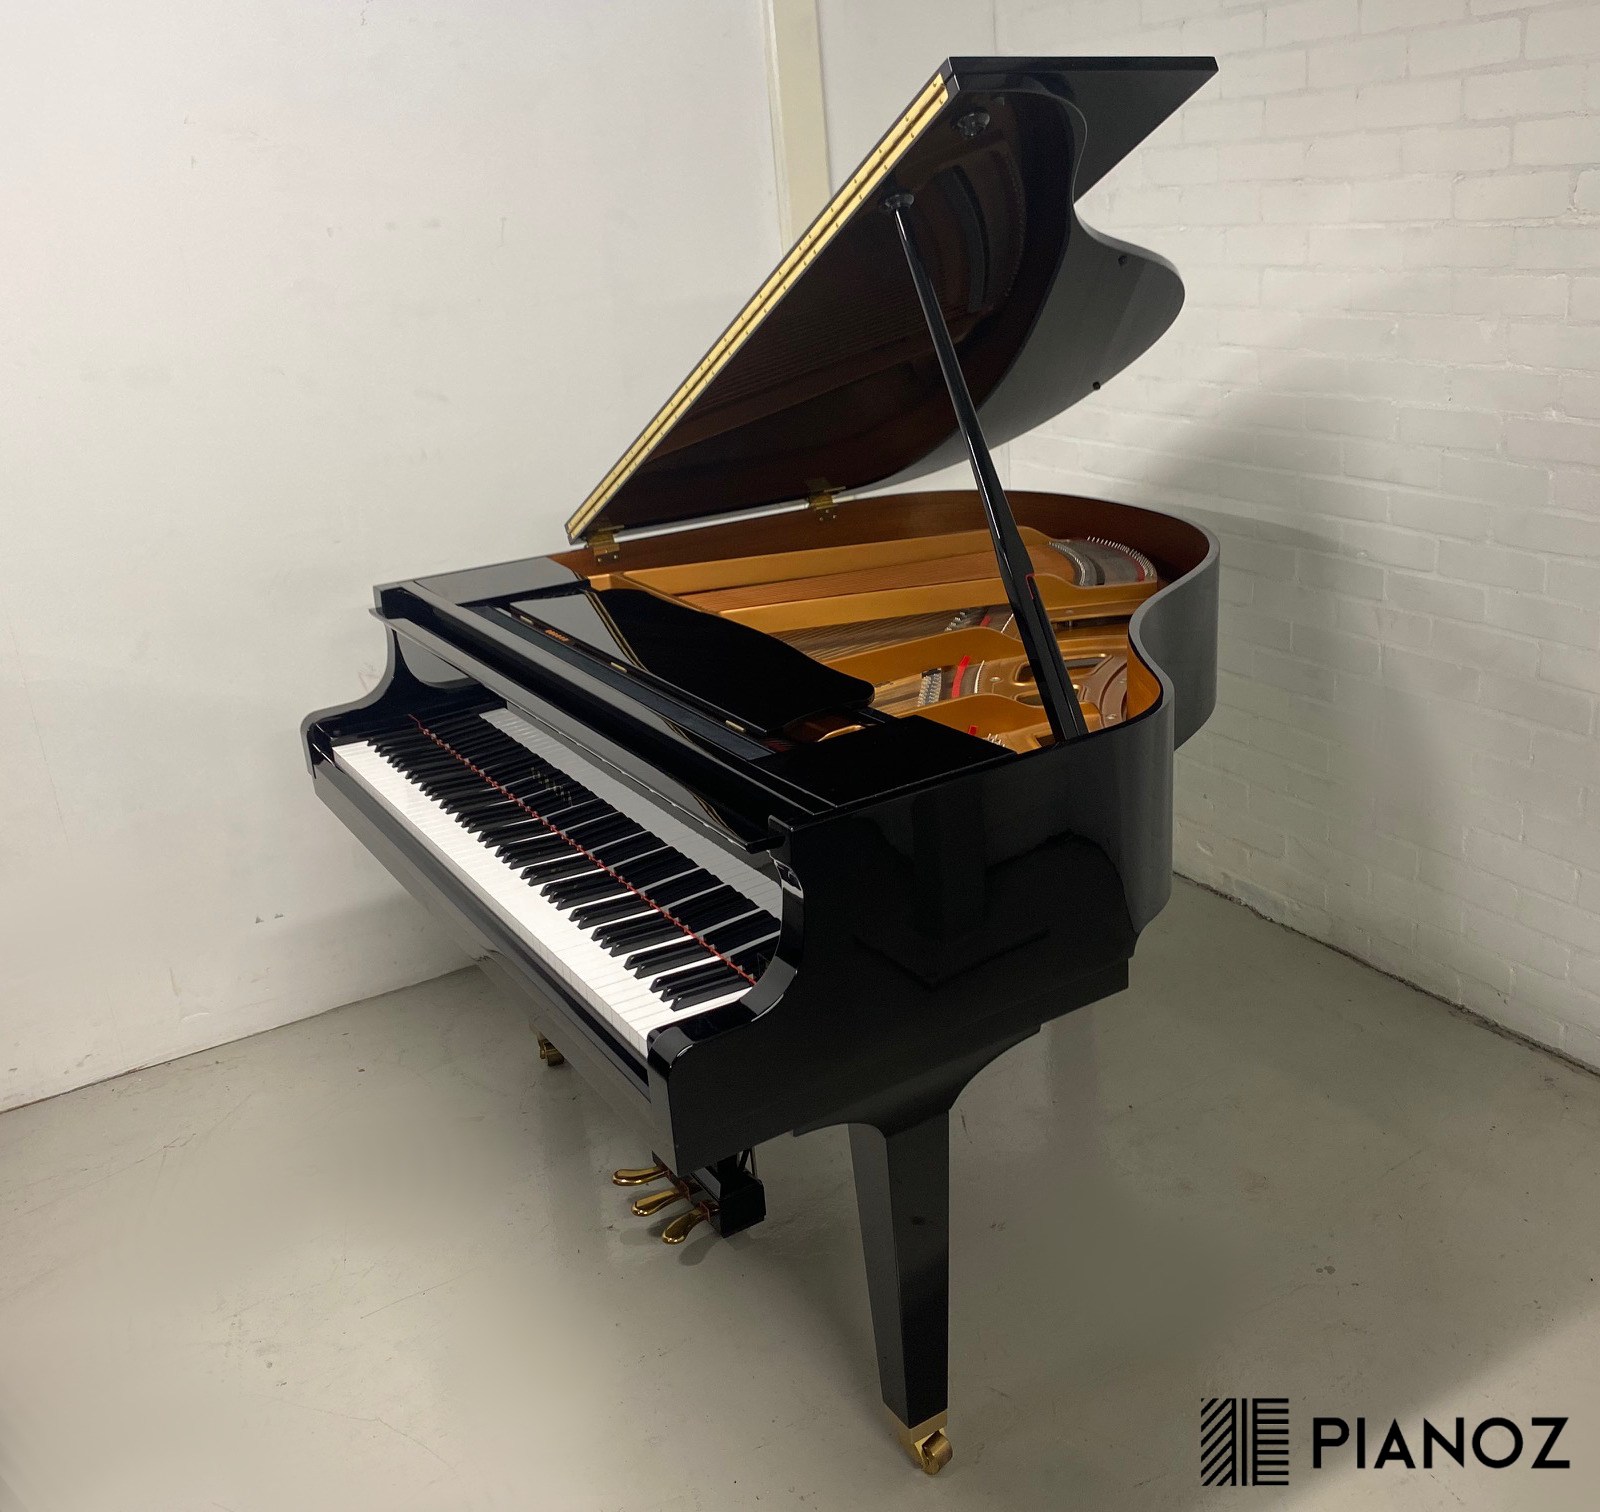 Yamaha GA1 Japanese Baby Grand Piano piano for sale in UK